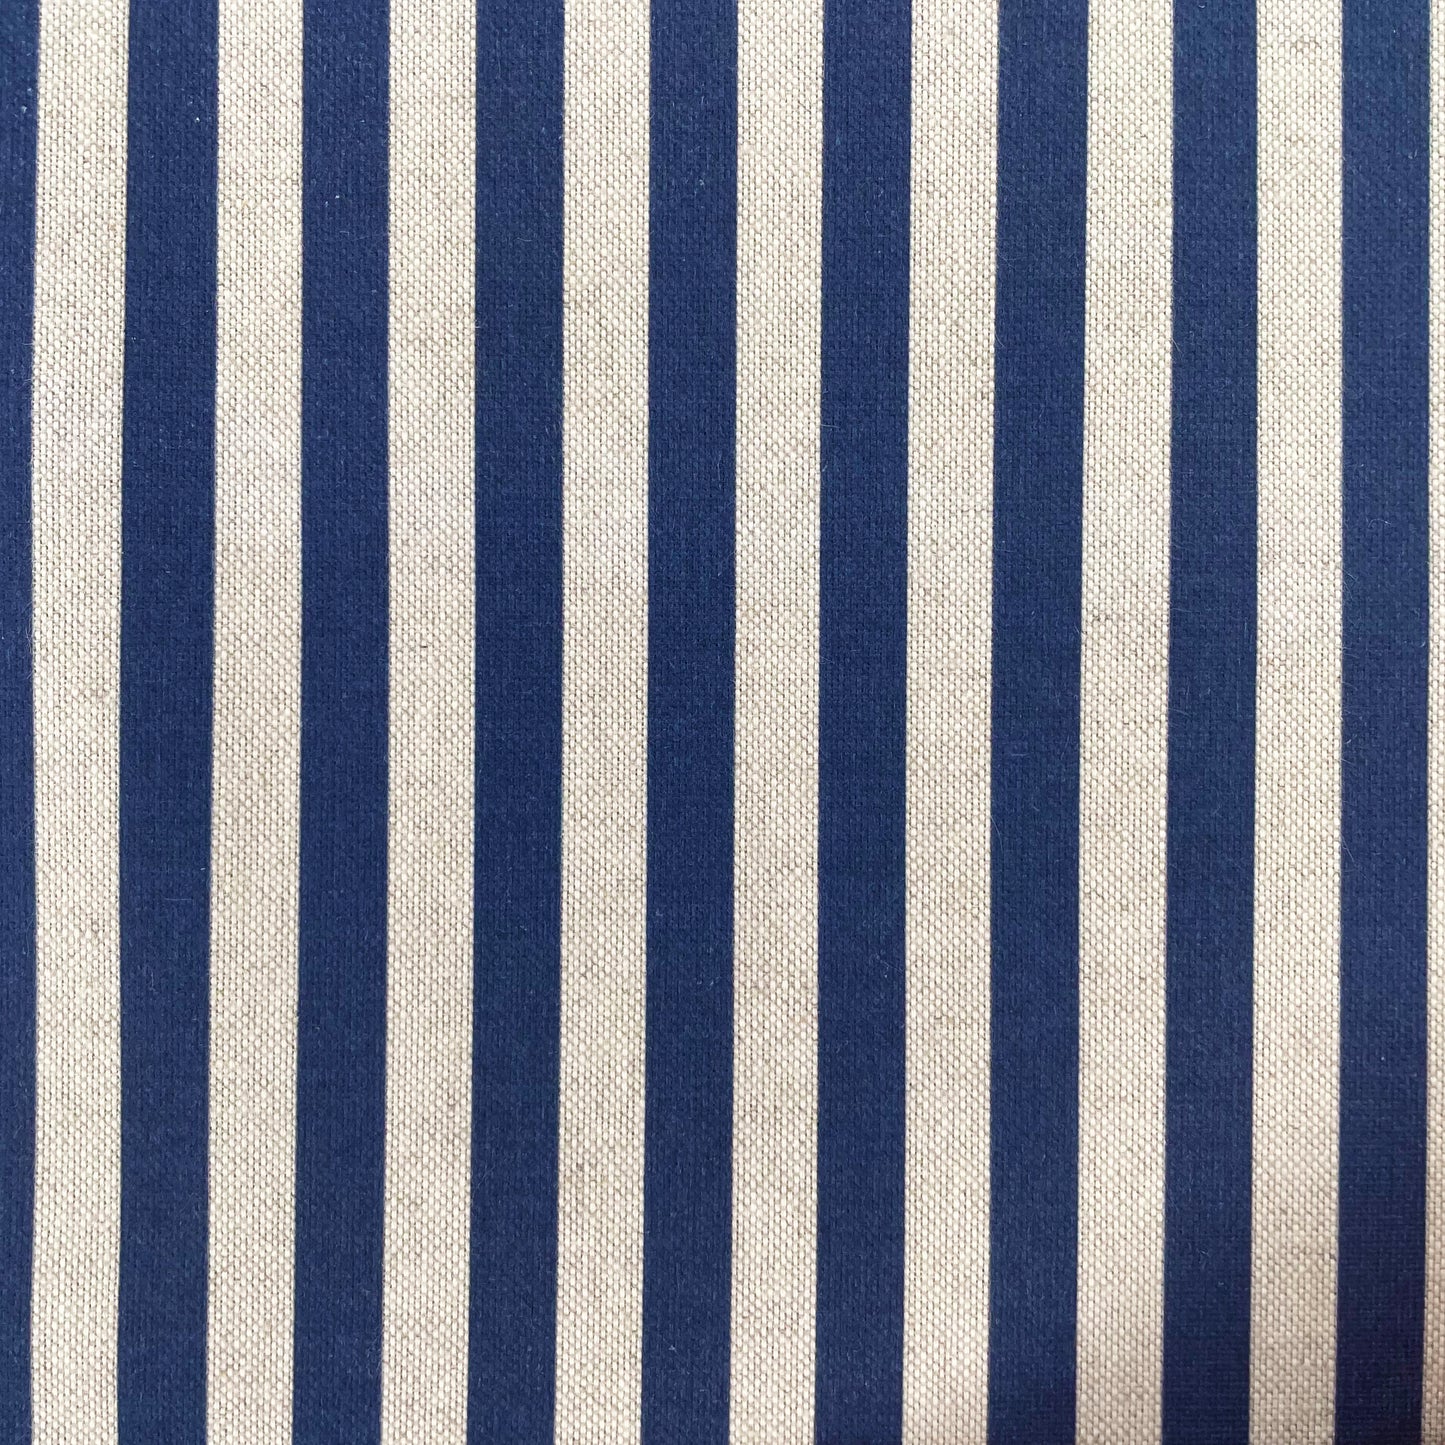 Greenlea Fabric